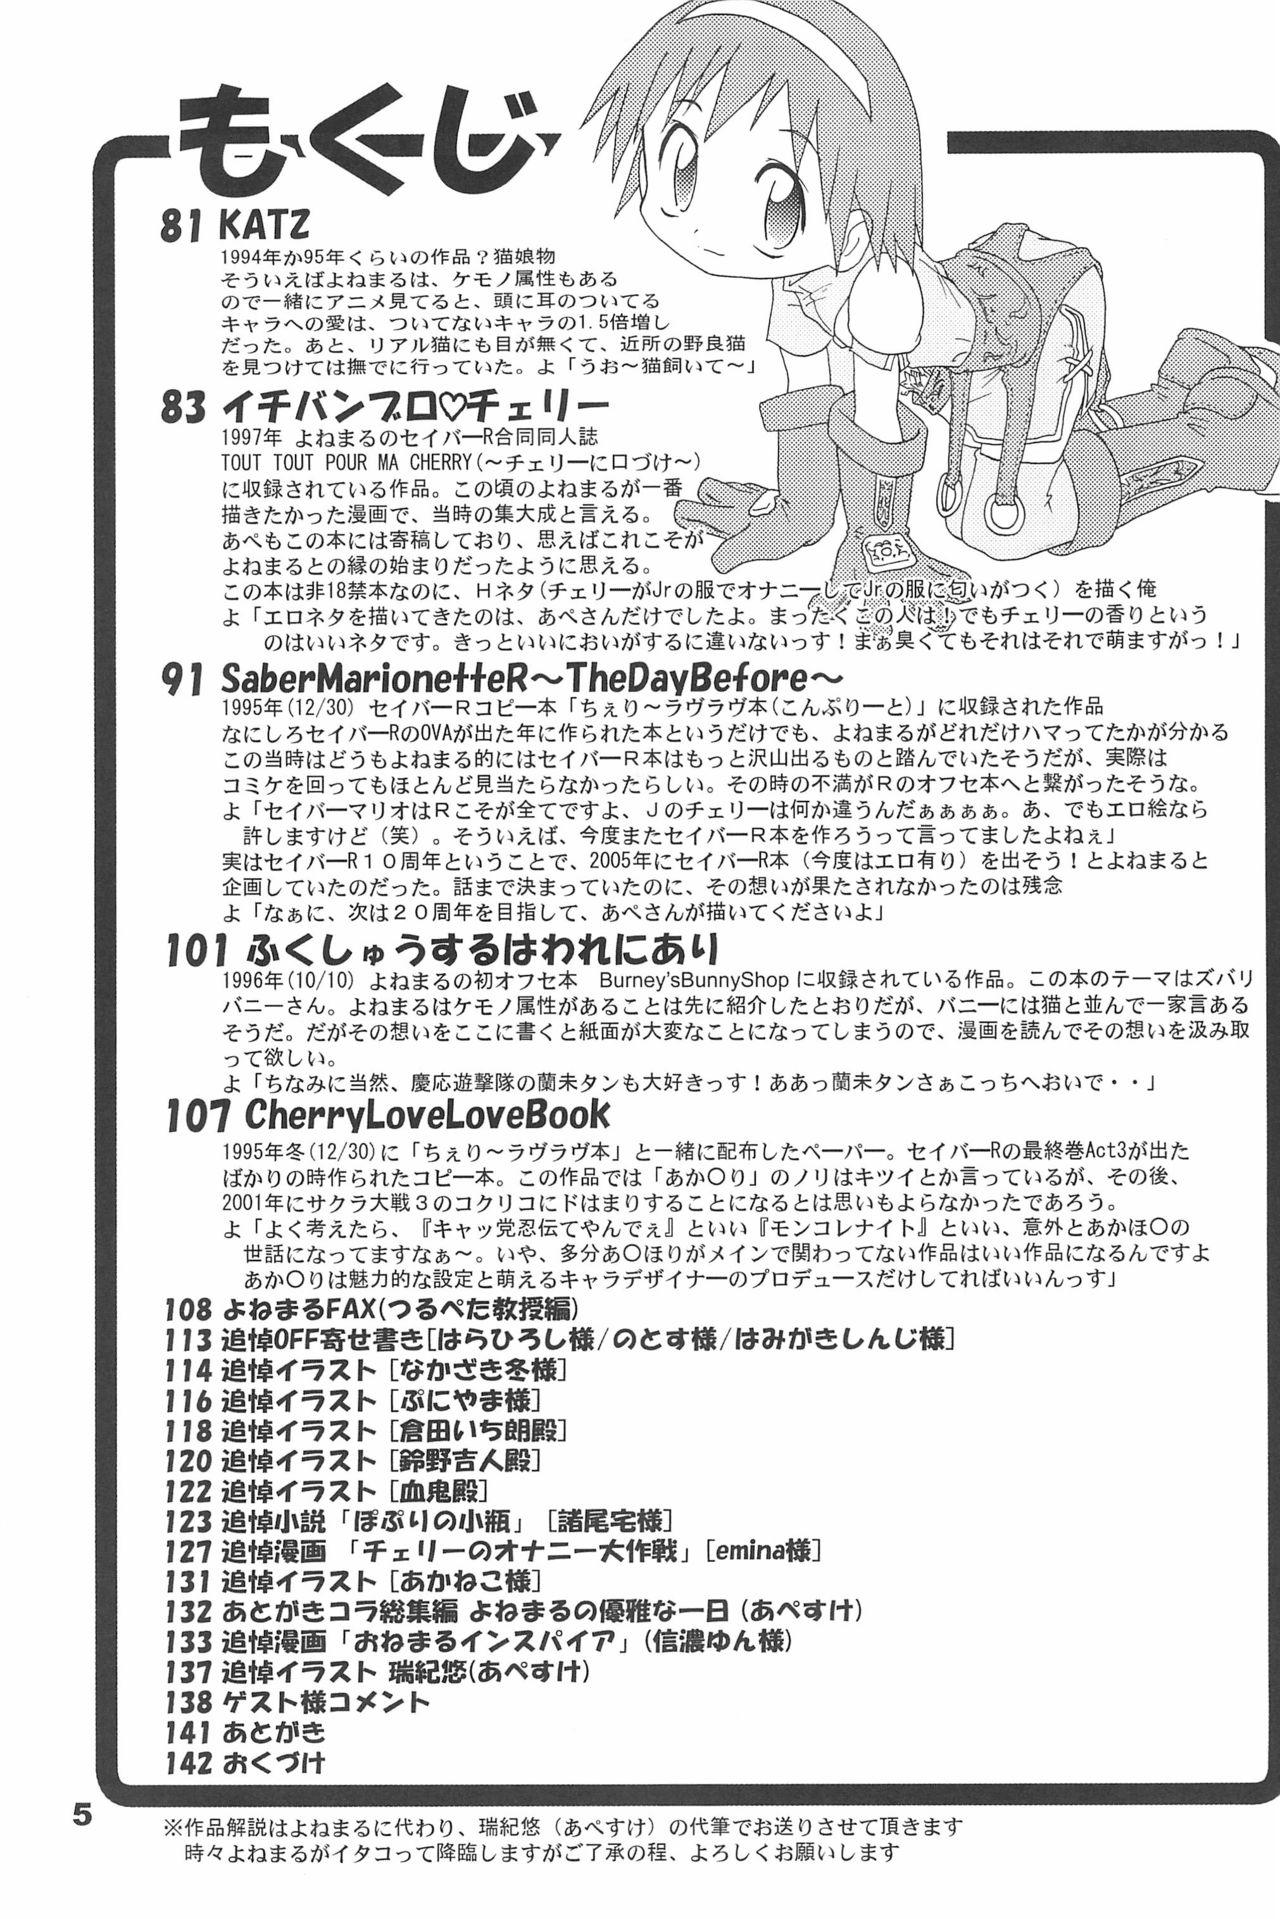 Backshots Yonemaru Archive 2 - Fun fun pharmacy Saber marionette True love story Princess tutu Chastity - Page 5